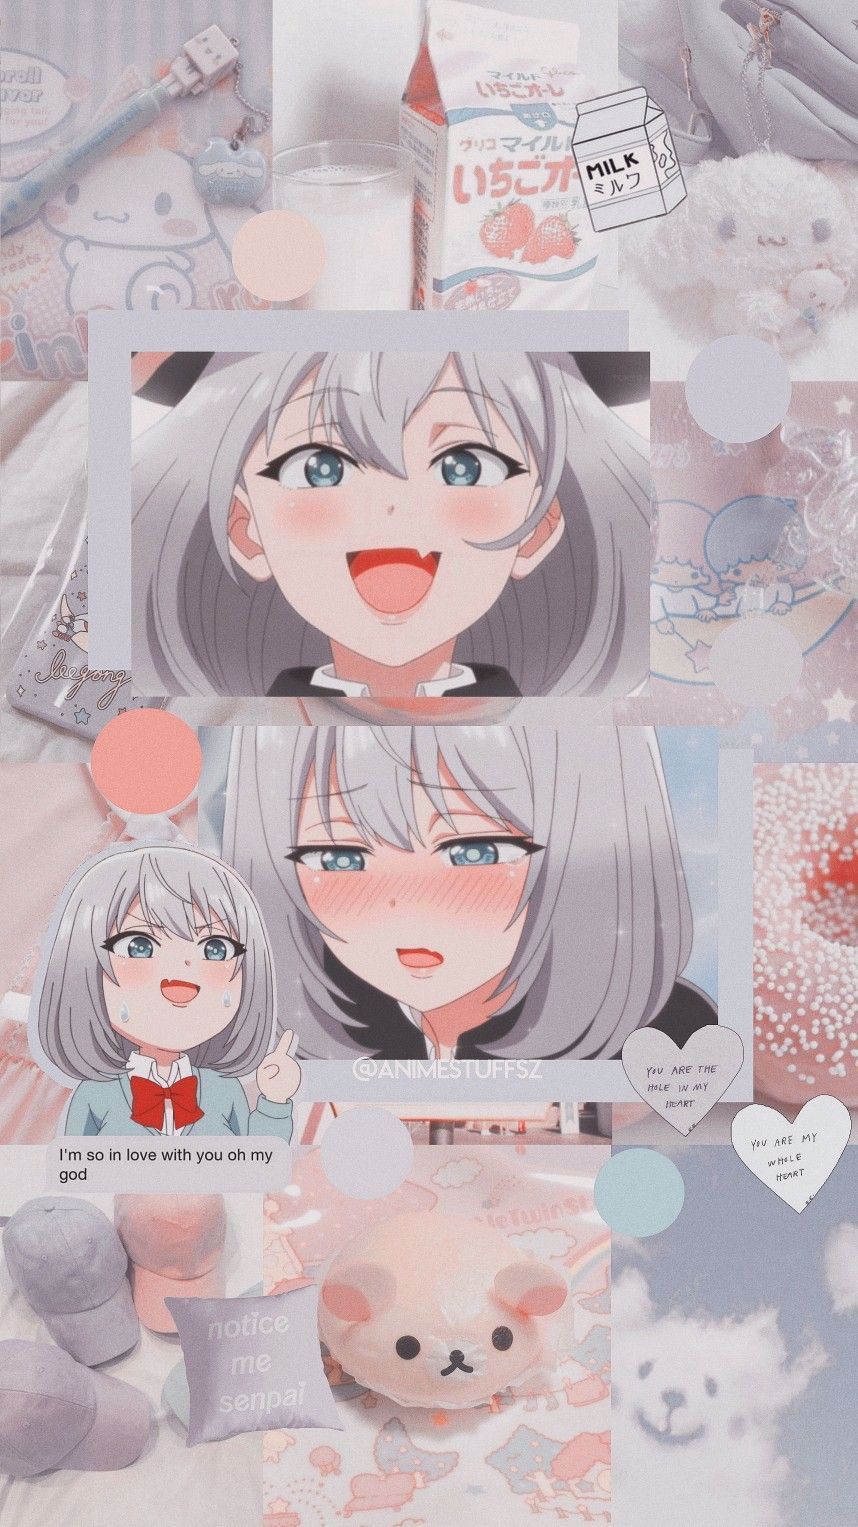 Gadis animasi. Anime wallpaper, Cute anime wallpaper, Pink wallpaper anime